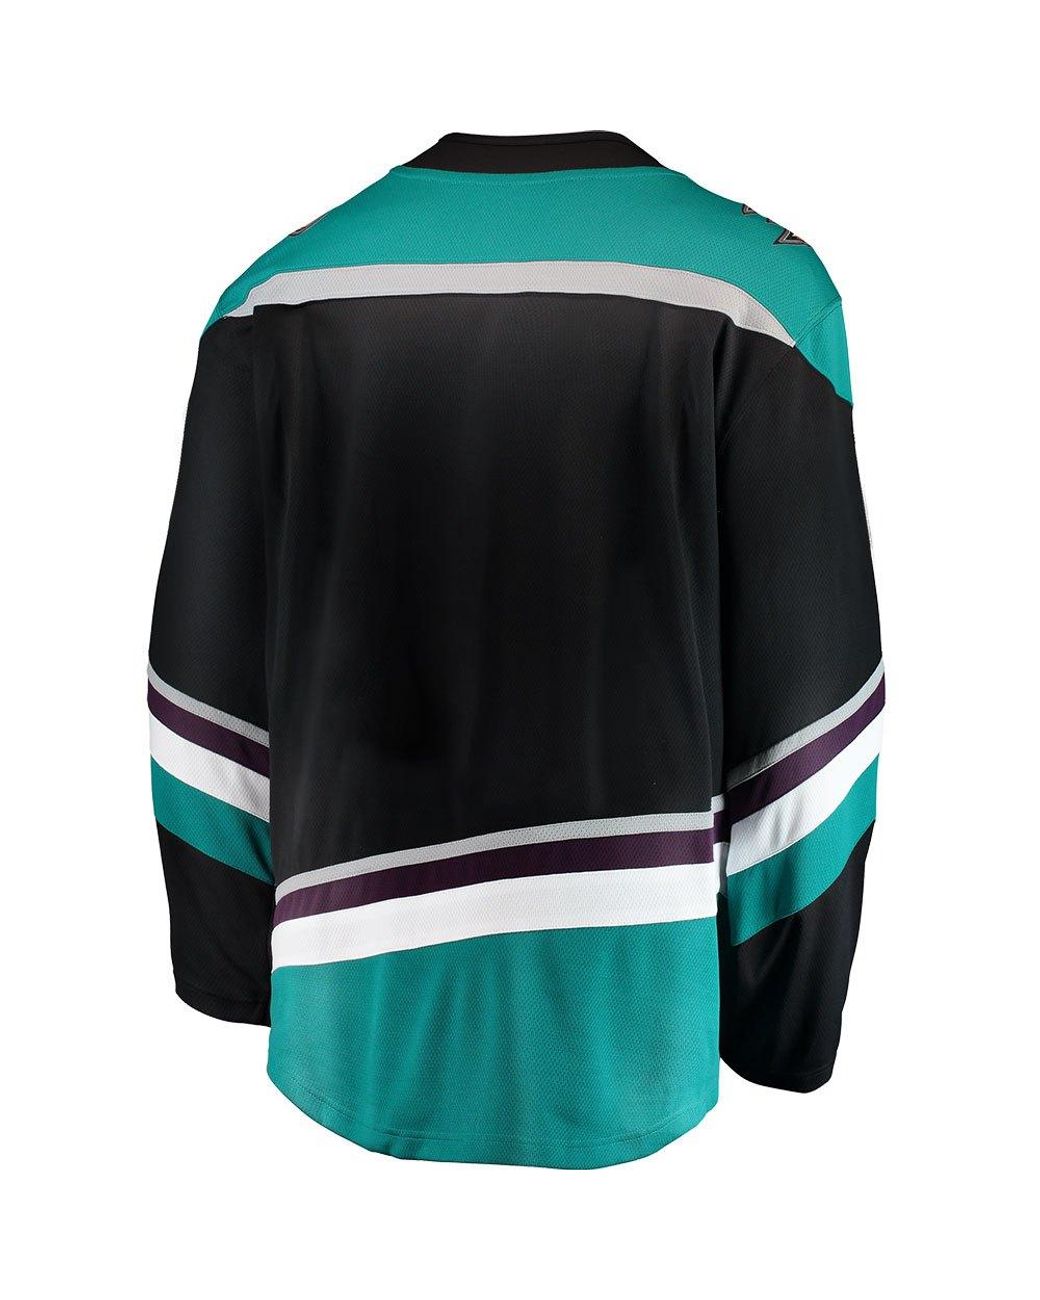 Anaheim Ducks Fanatics Branded Special Edition 2.0 Breakaway Blank Jersey -  White